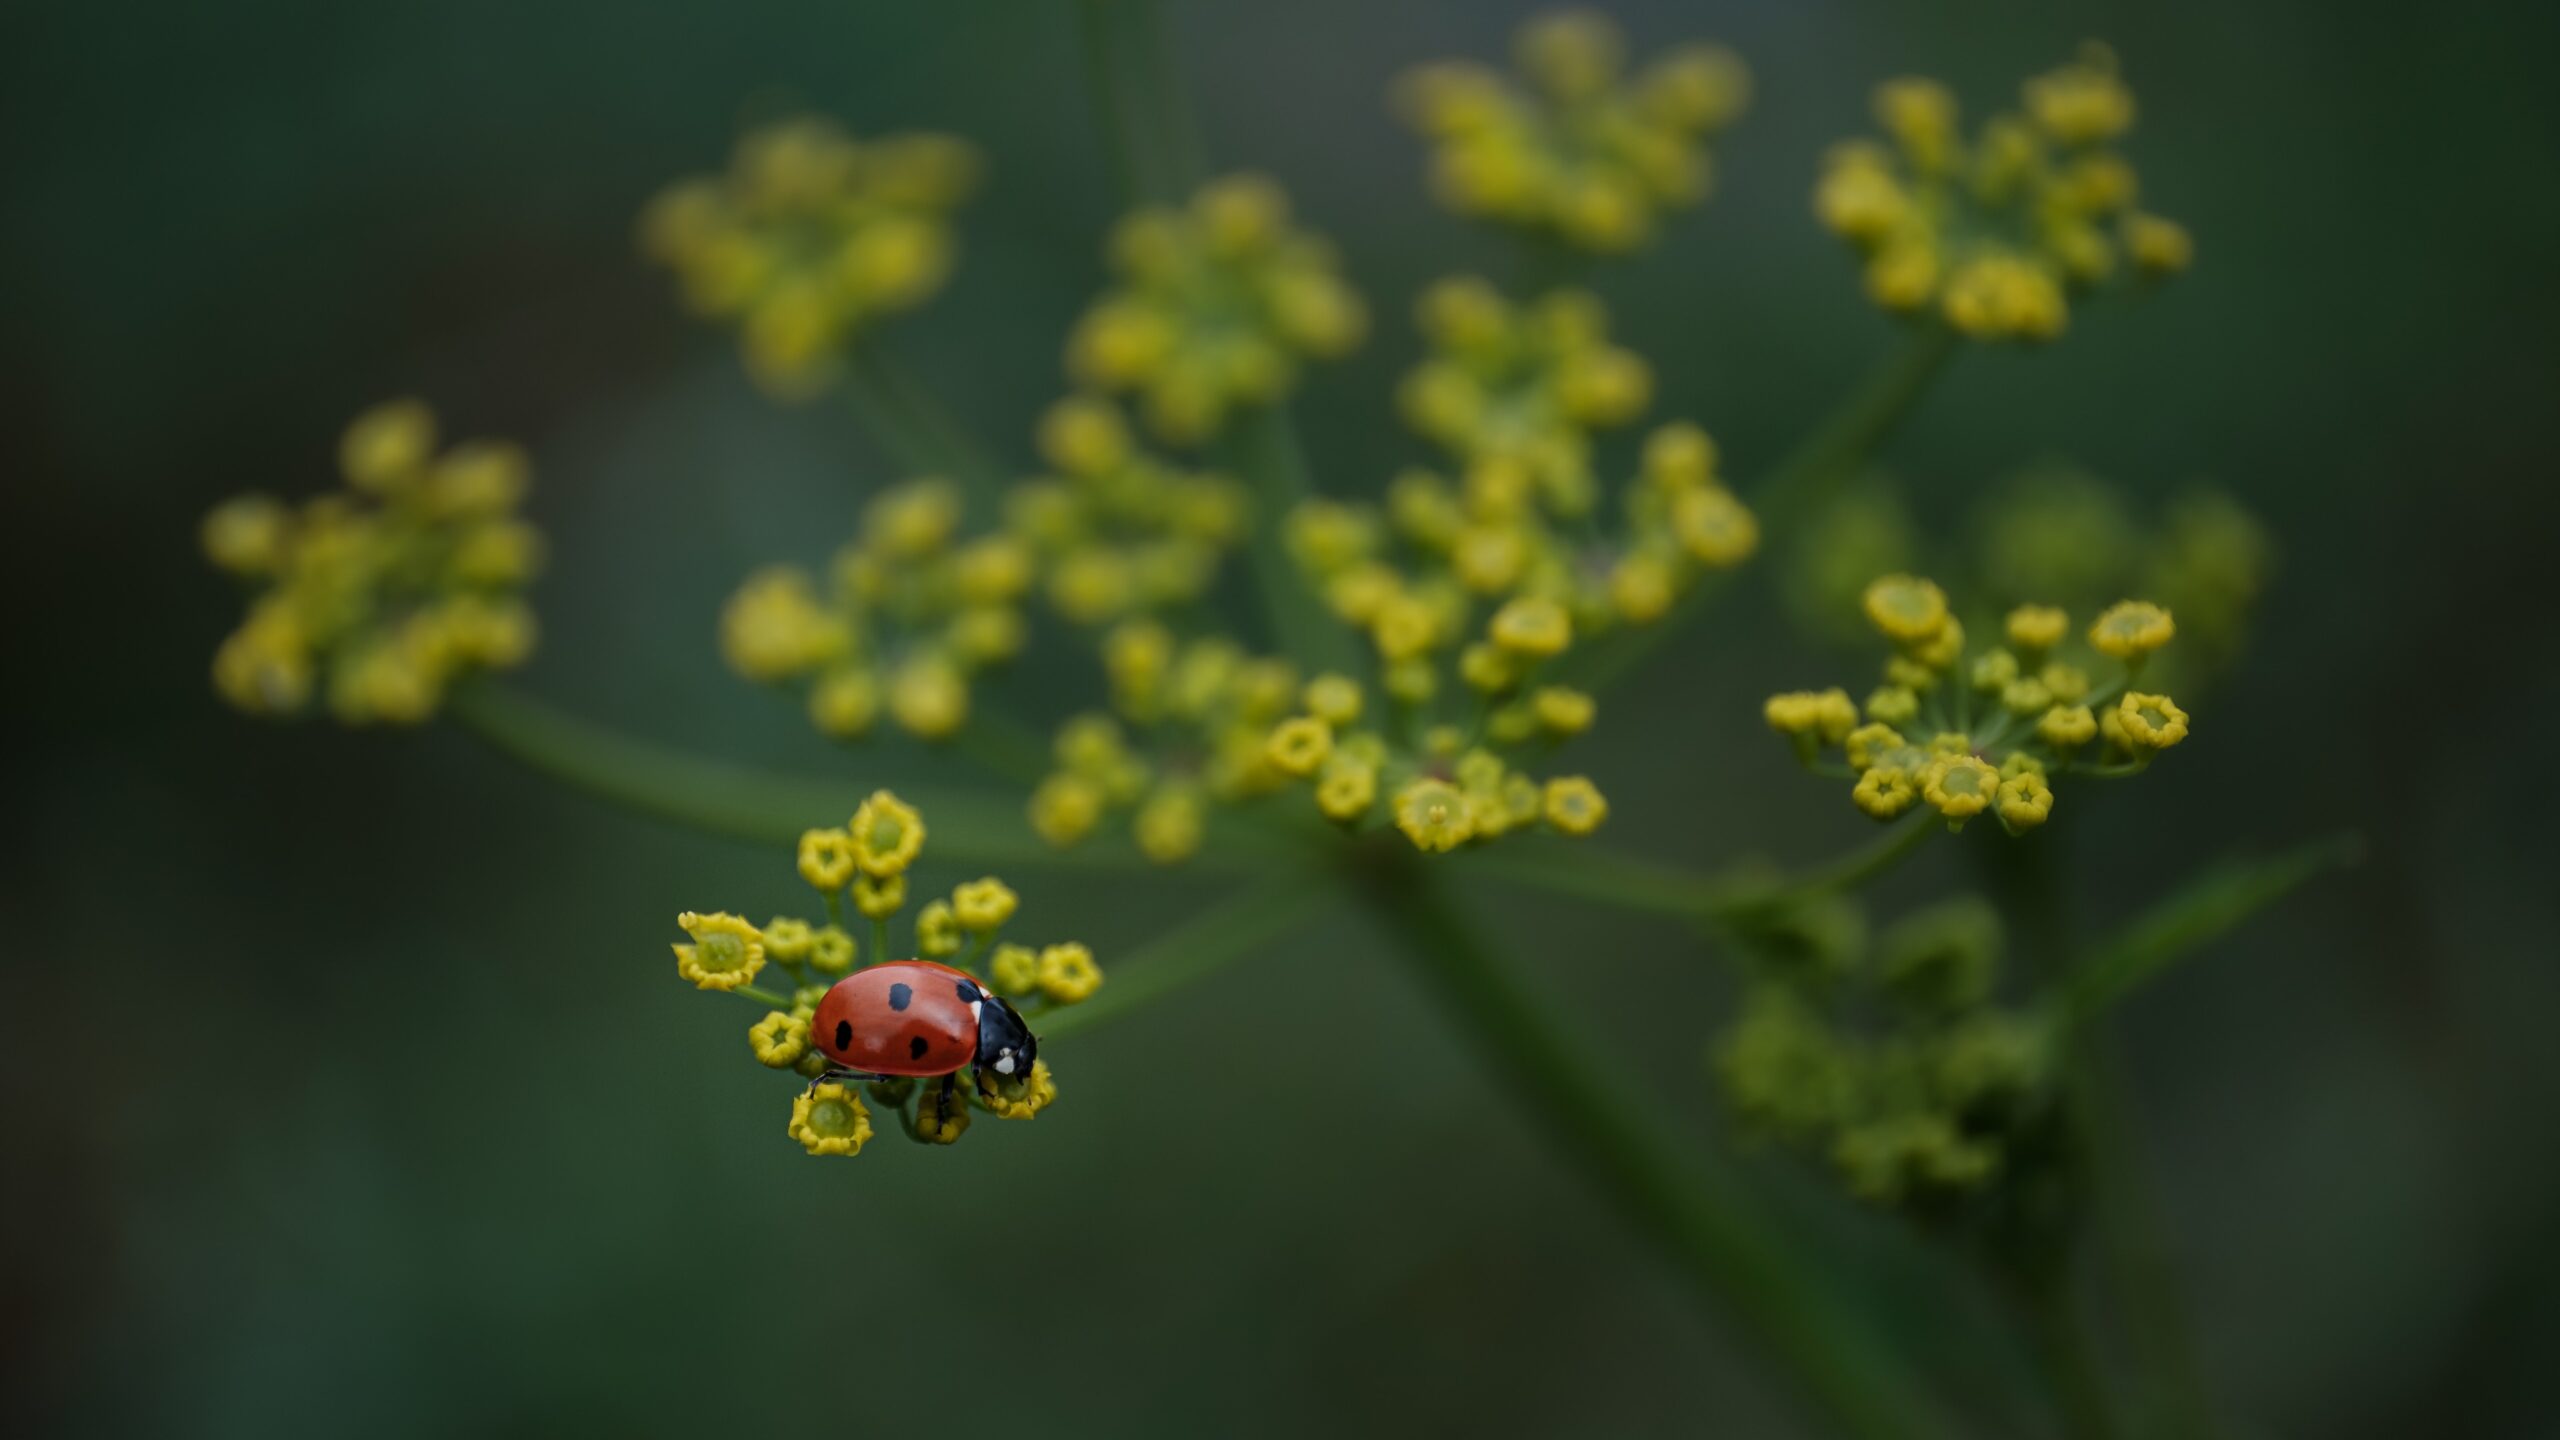 A ladybug on a flower.